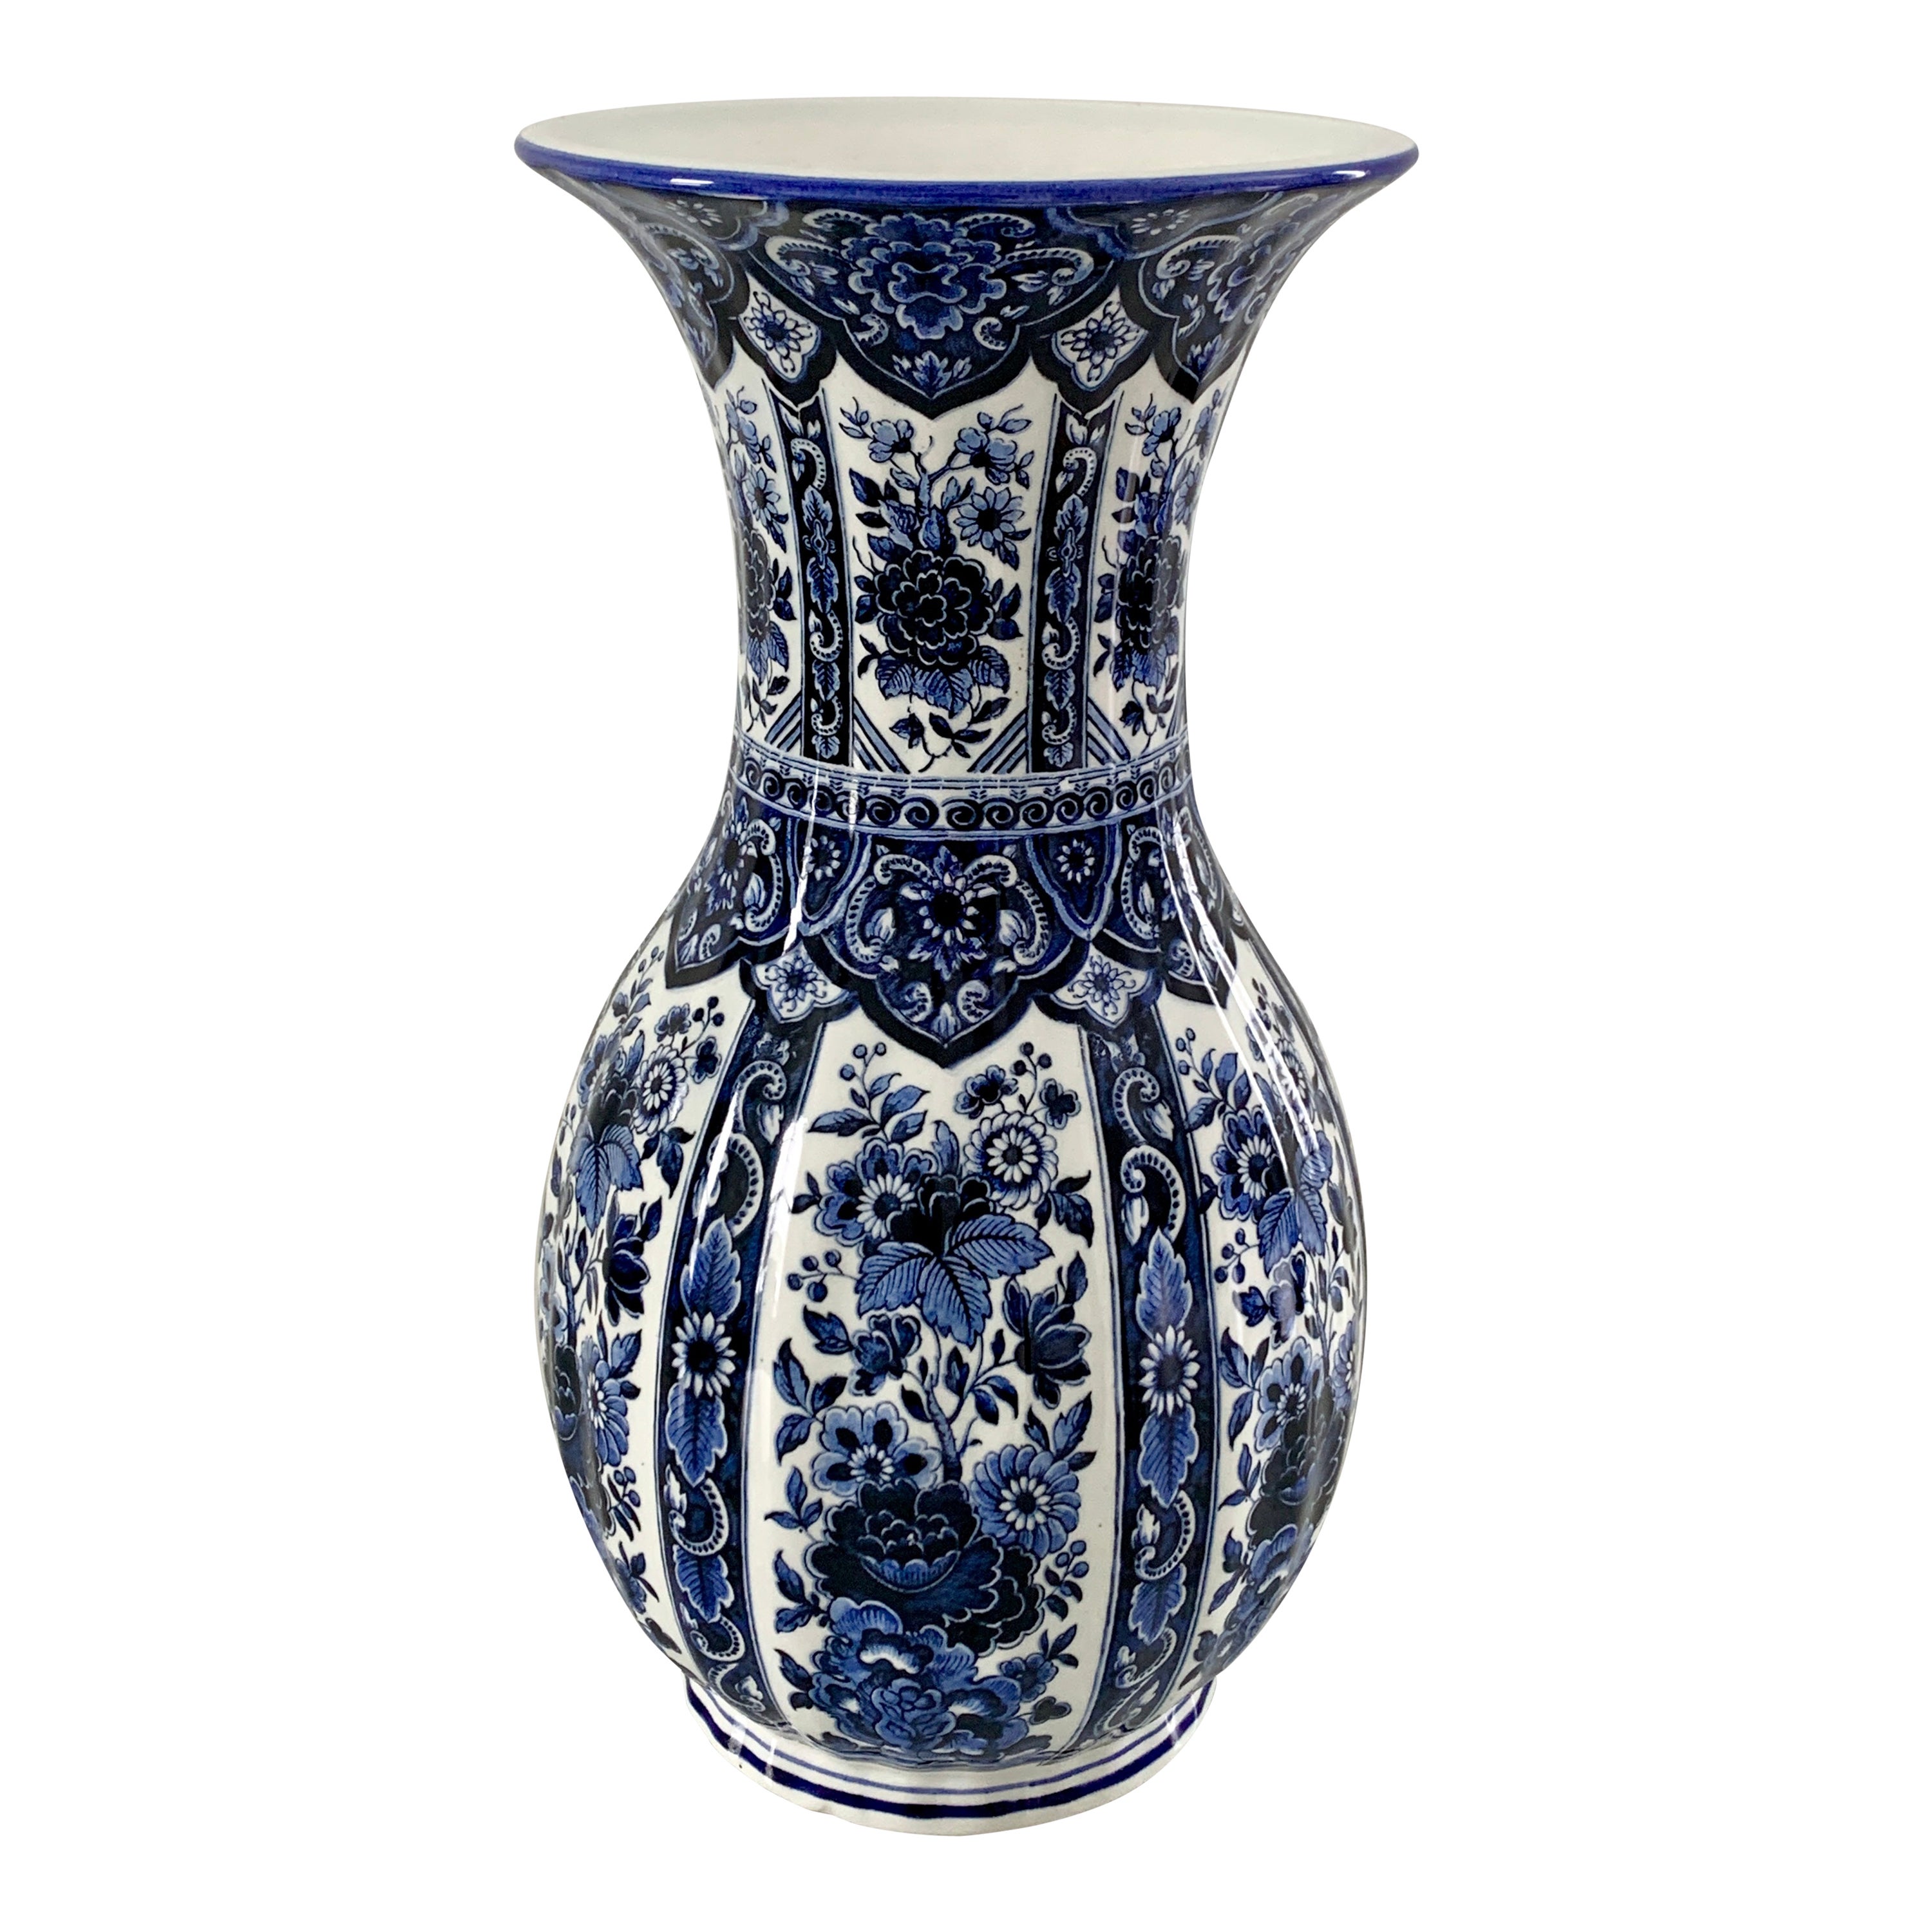 Delfts Blue and White Chinoiserie Porcelain Vase